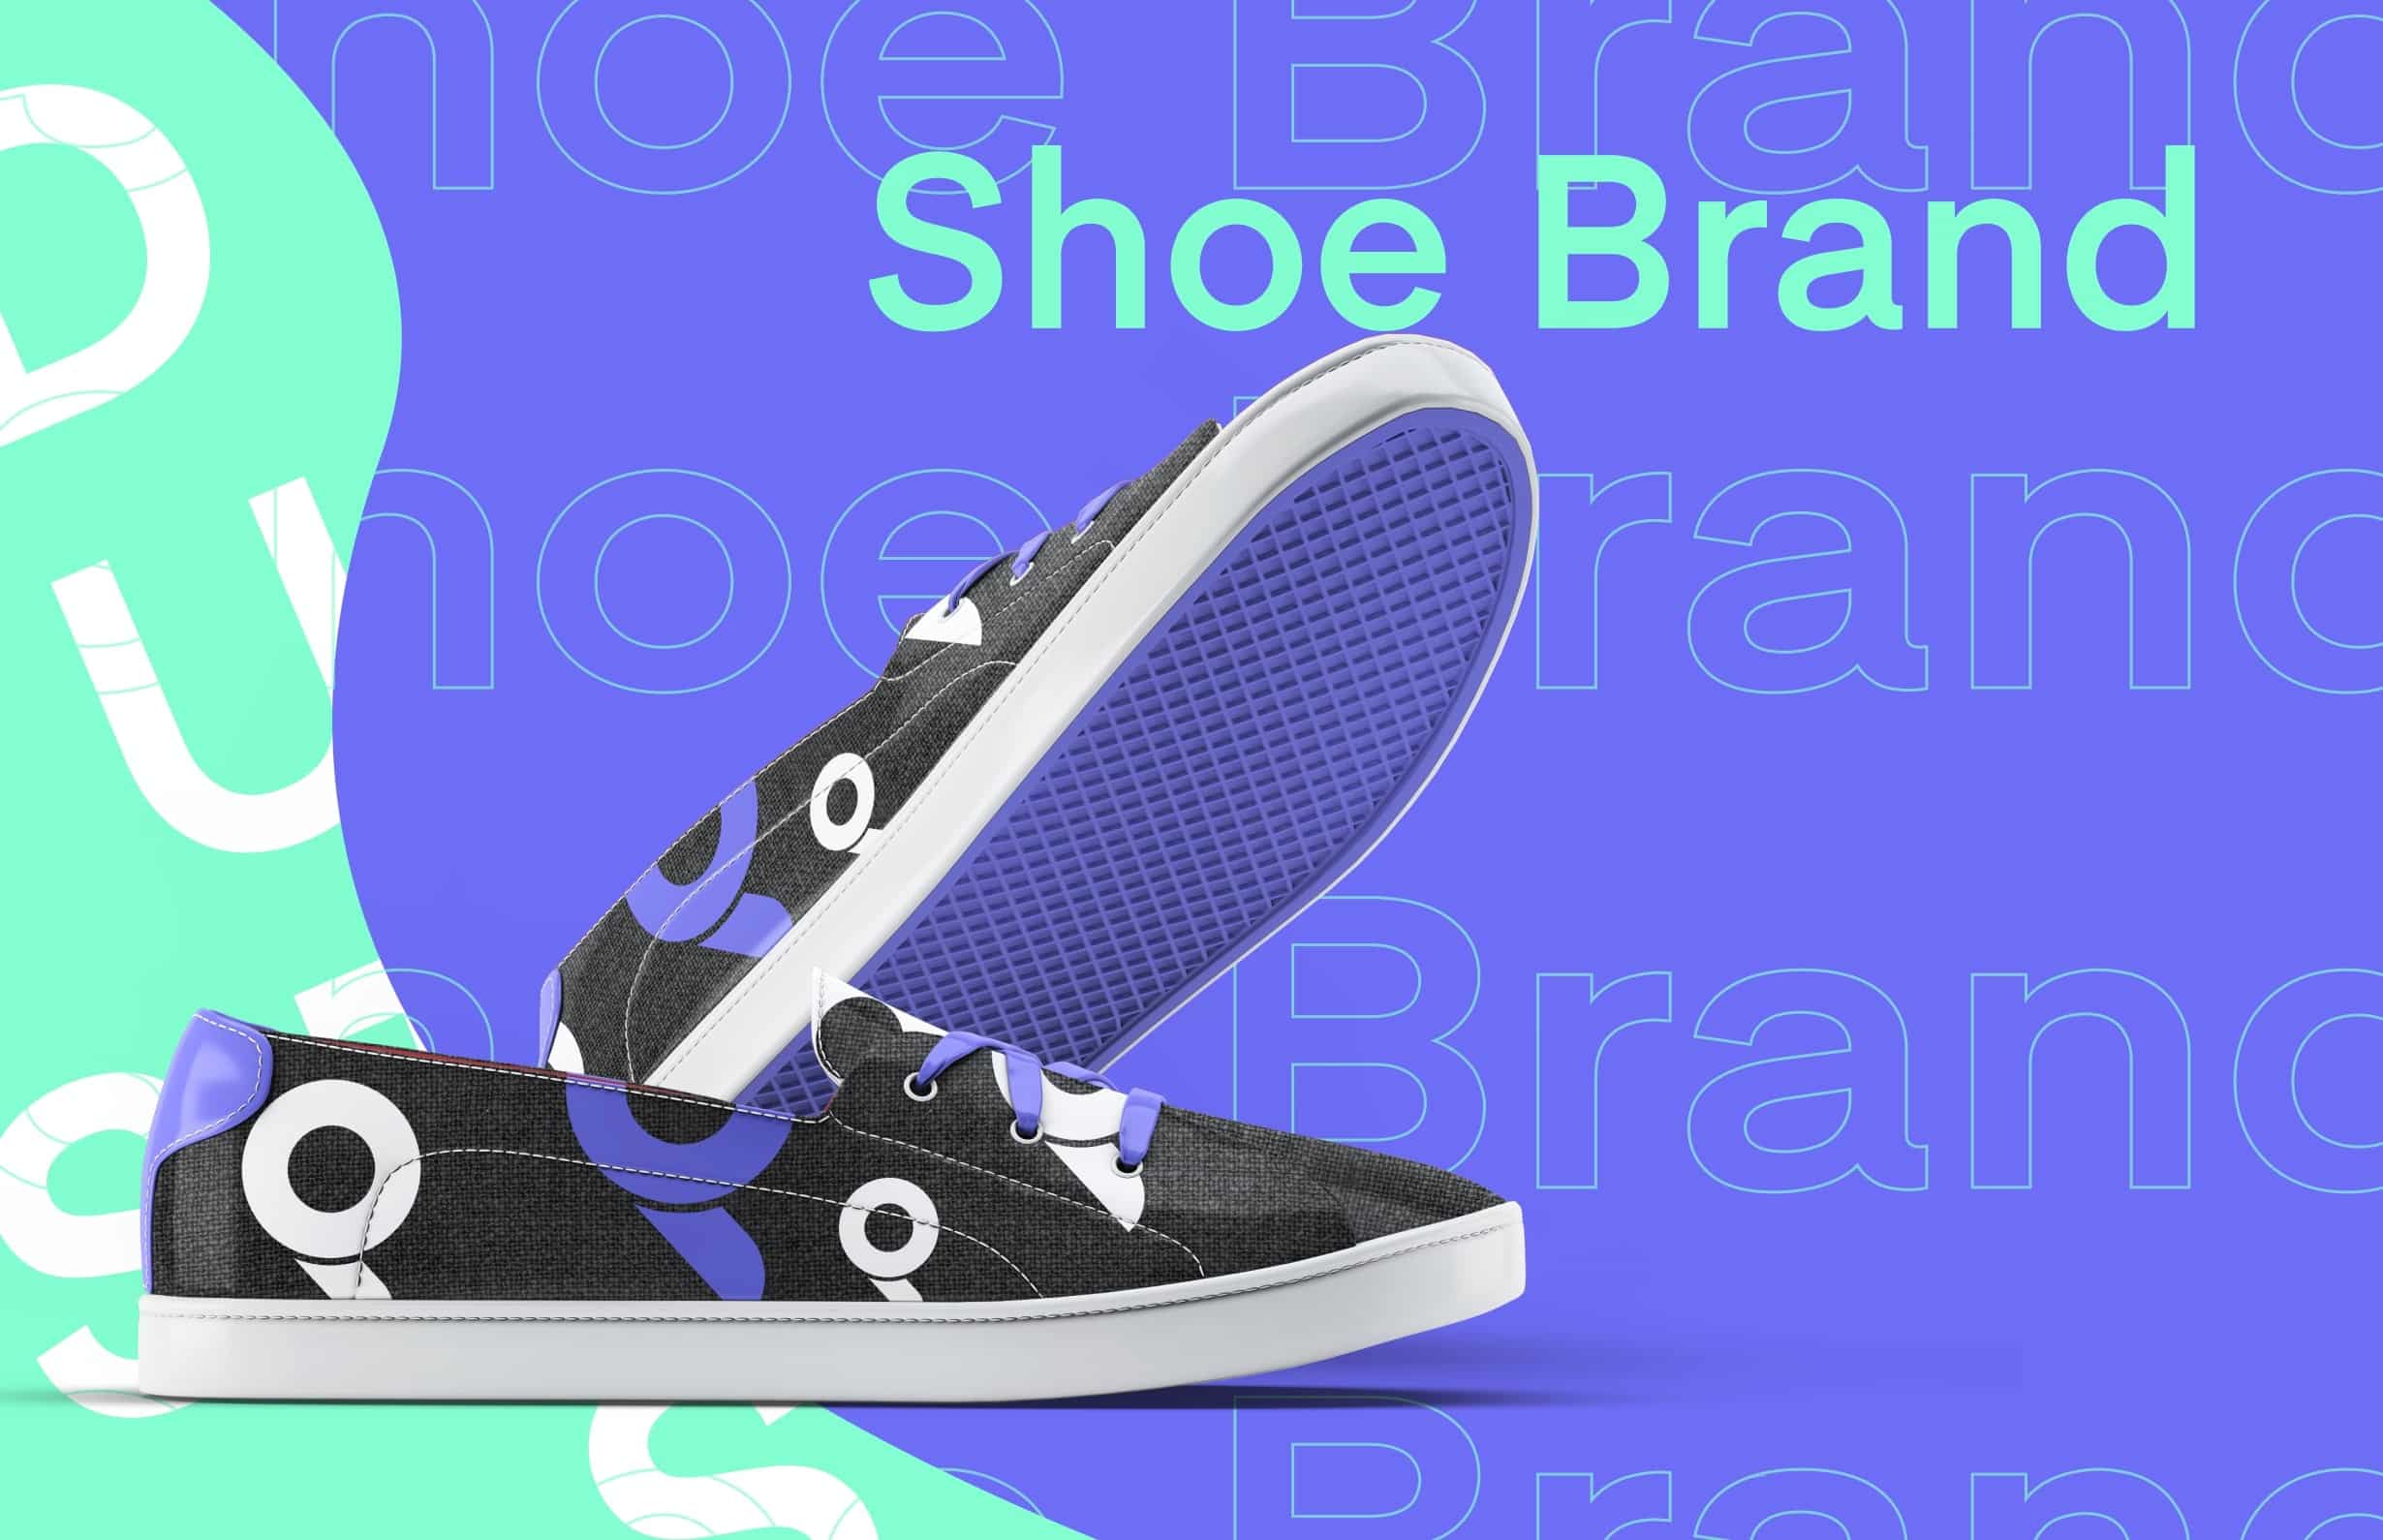 Shoe Brand Case Study